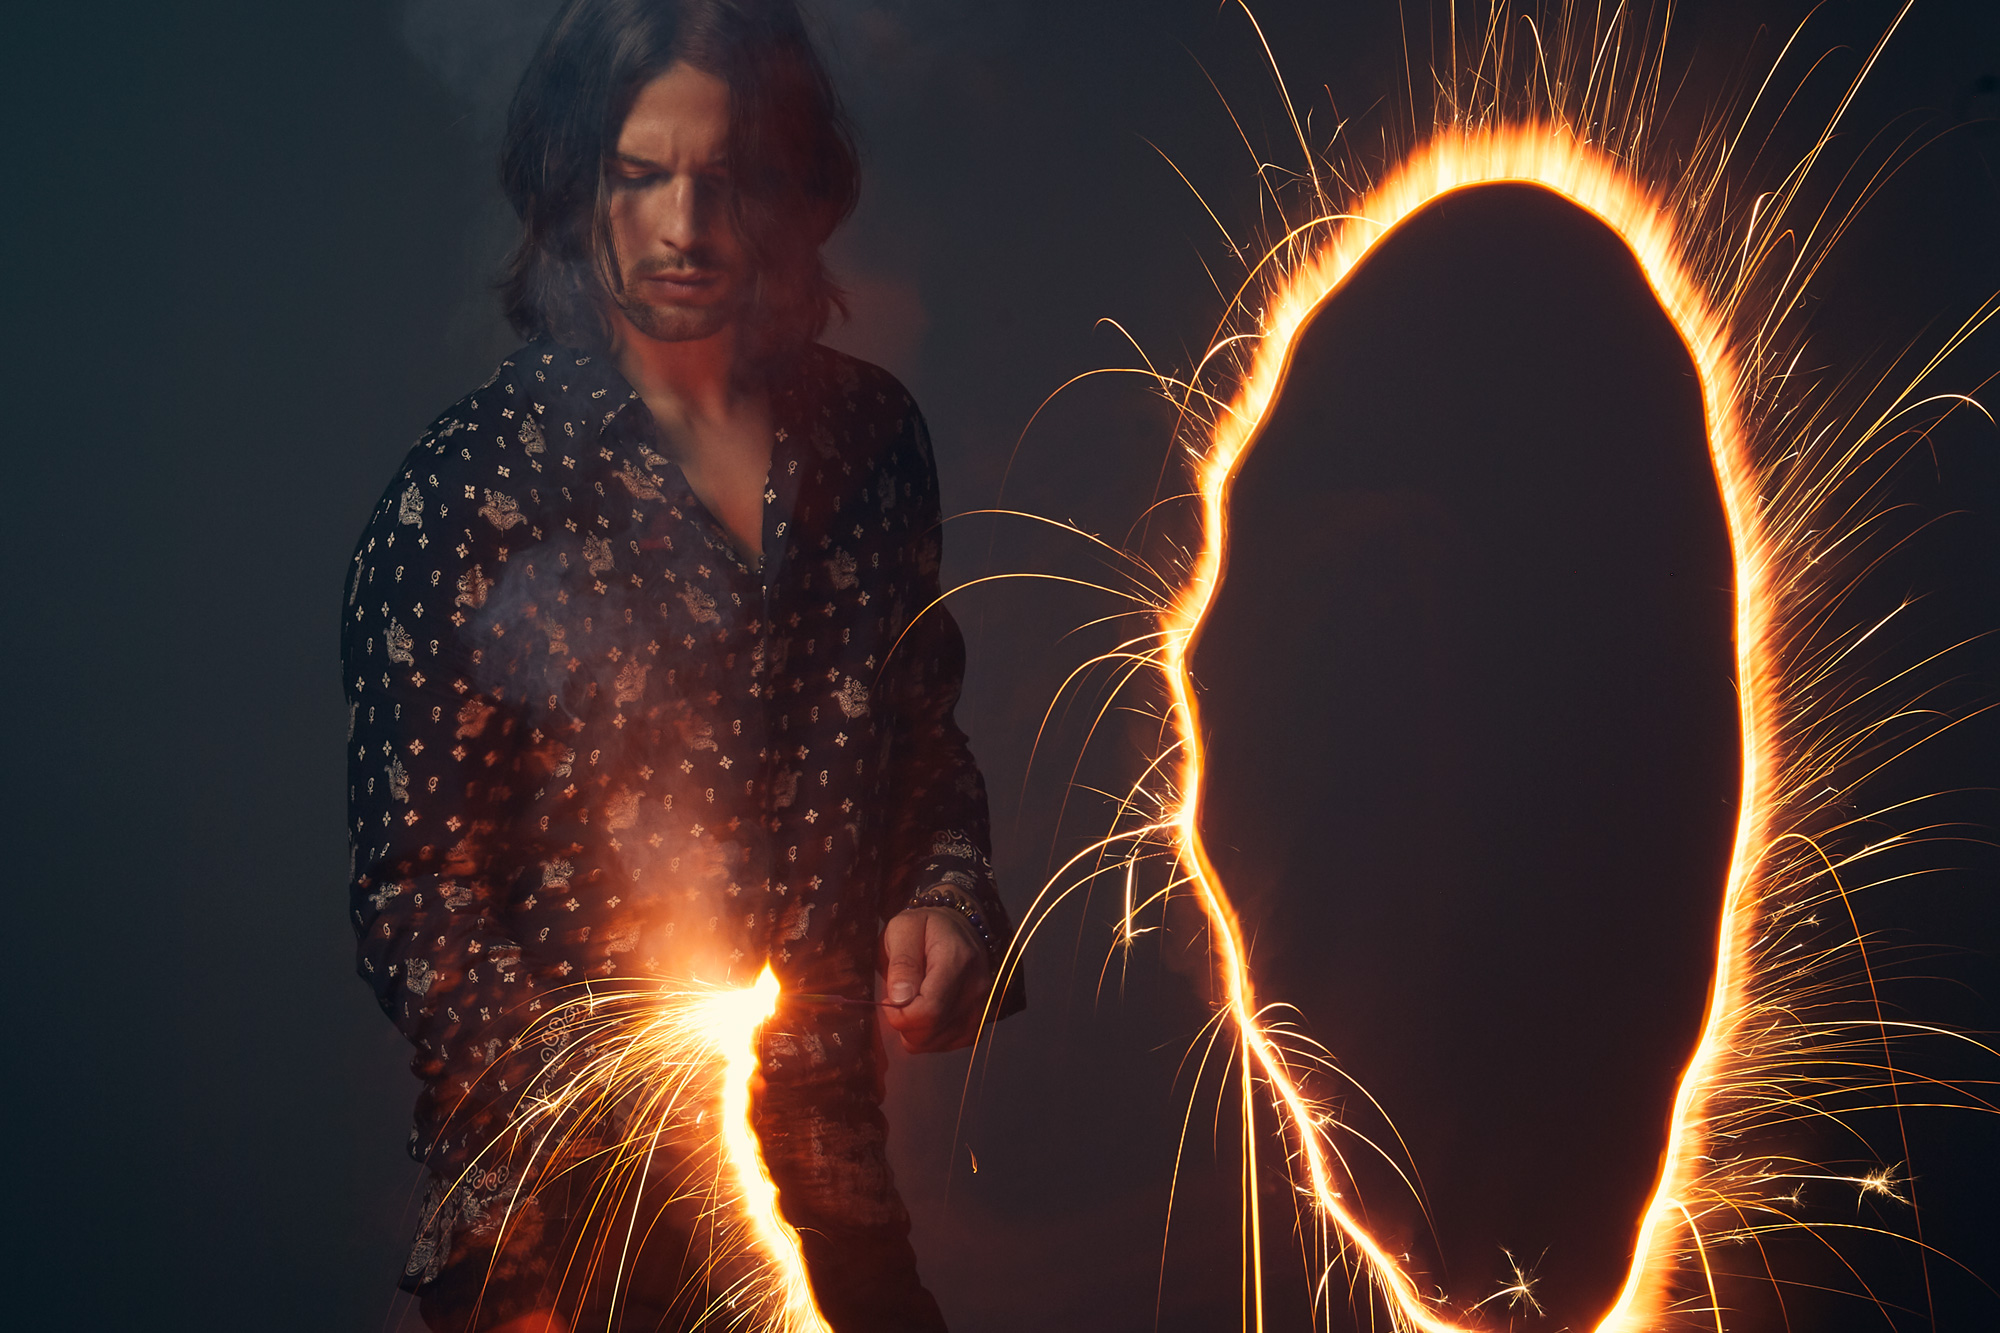 David Myhre studio portrait with fireworks